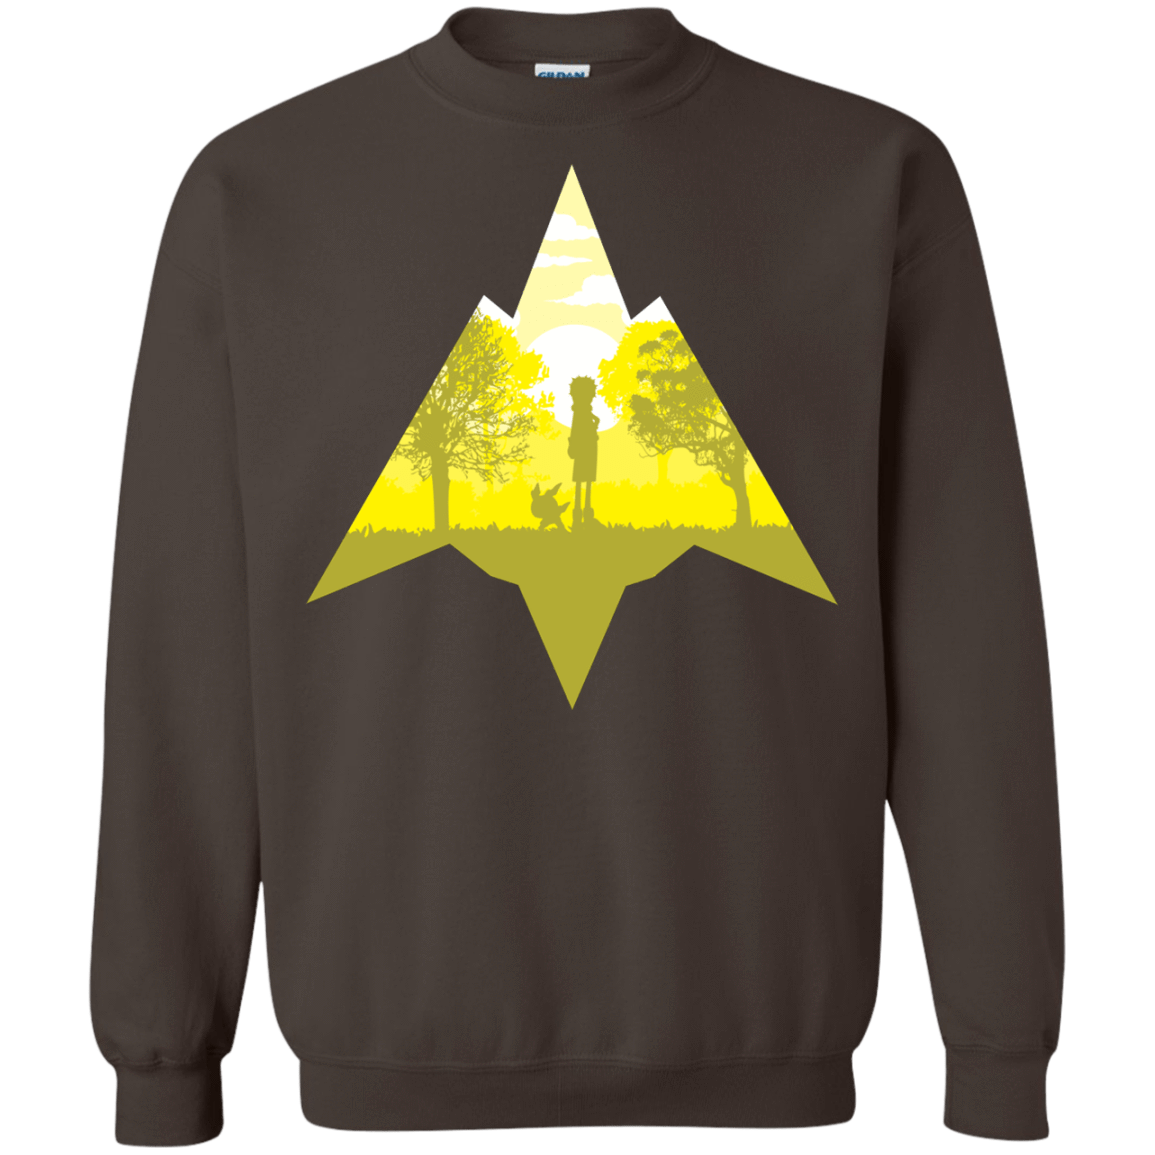 Sweatshirts Dark Chocolate / S Miracles Crewneck Sweatshirt